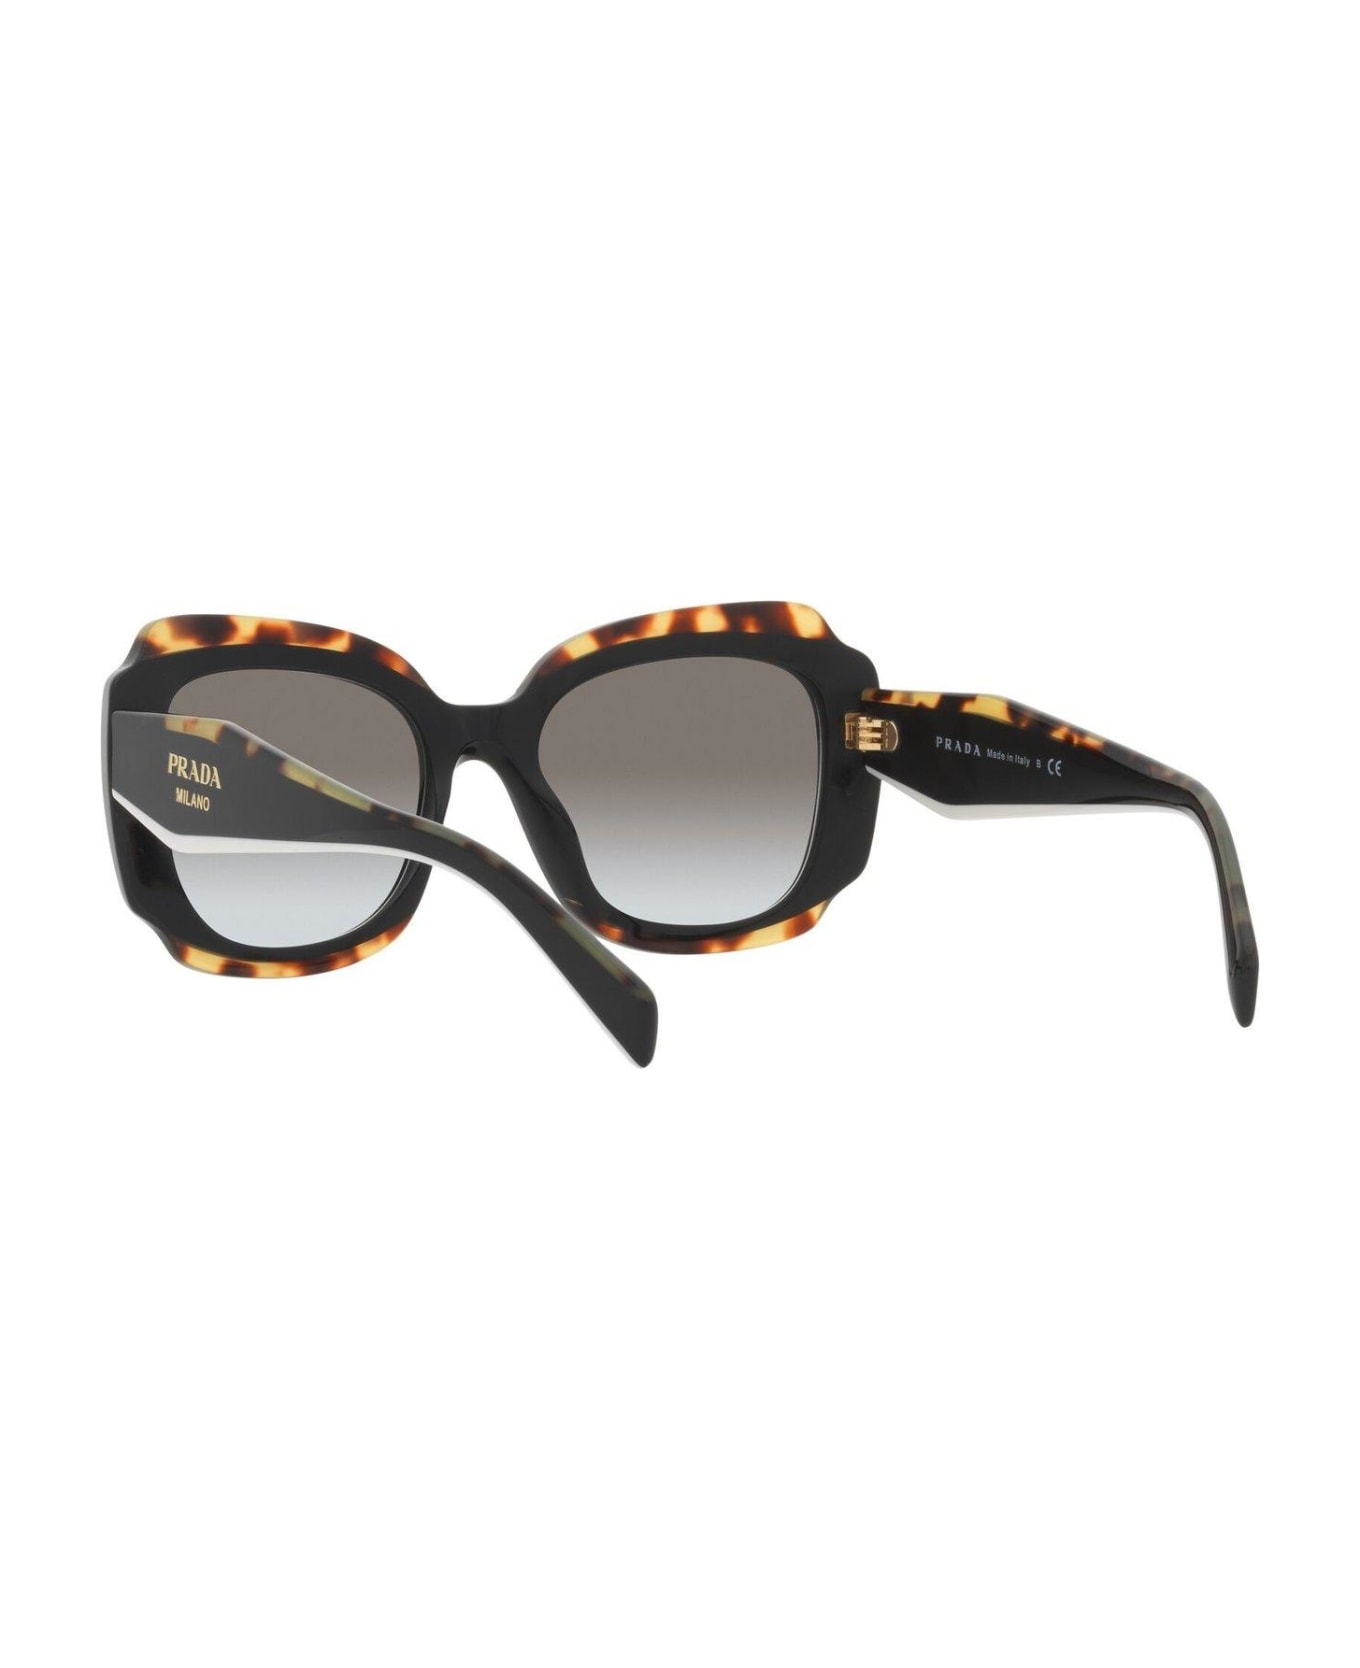 Prada Eyewear Square Frame Sunglasses - 01M0A7 サングラス